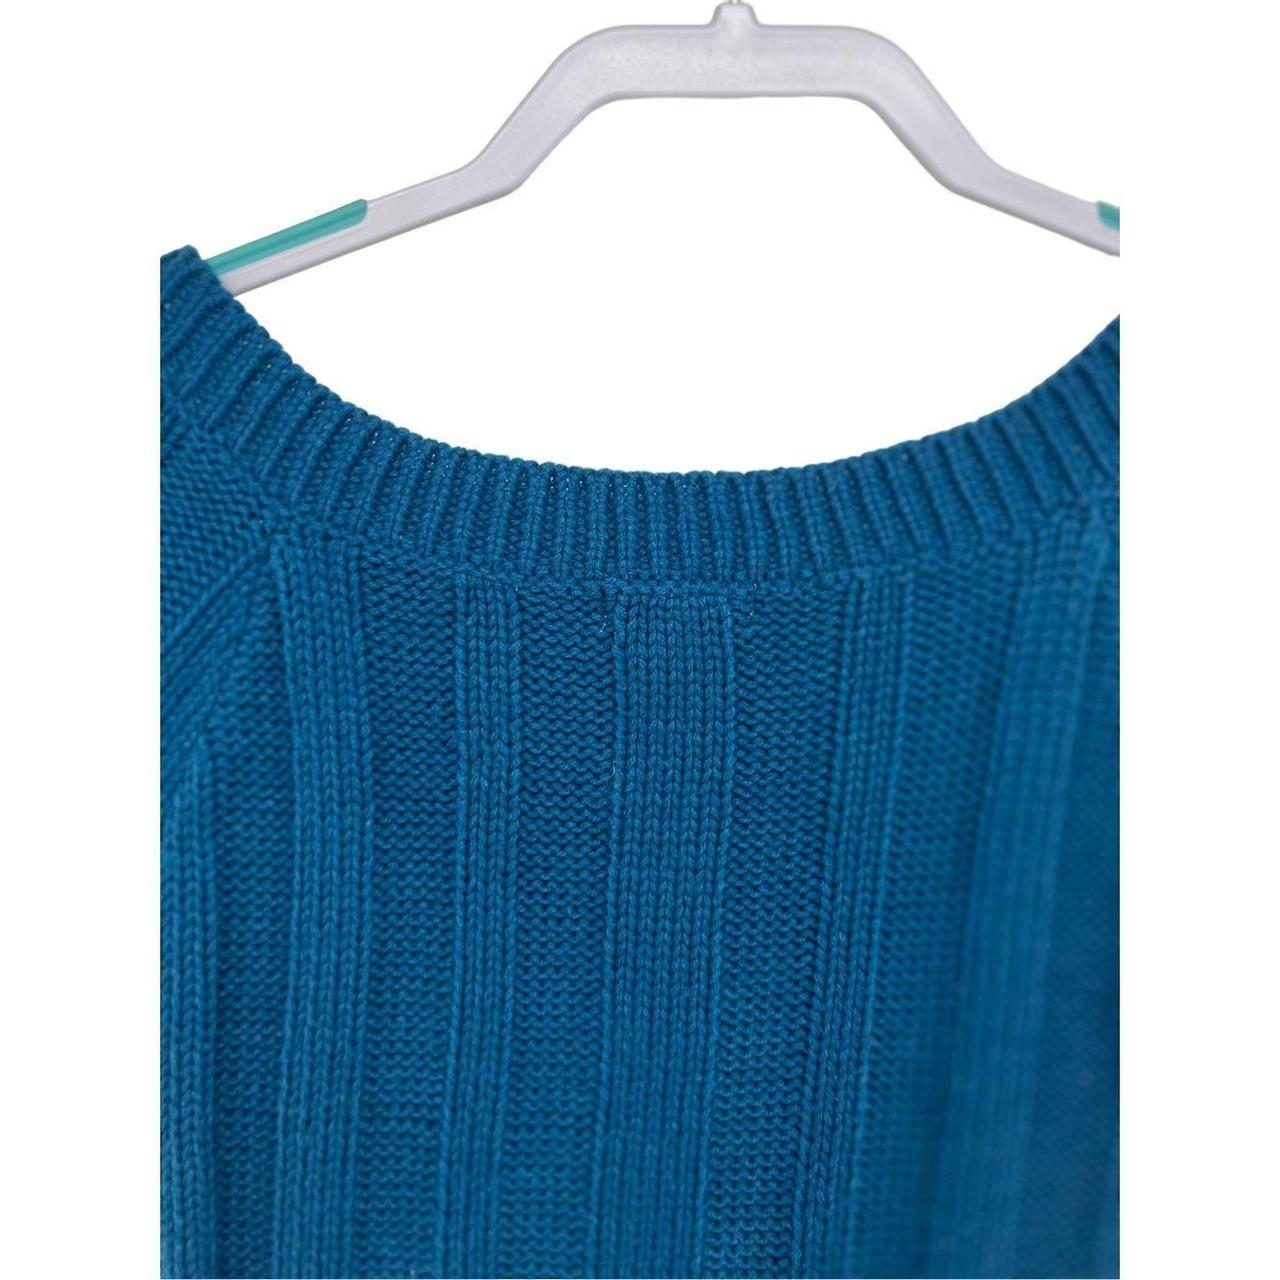 Ambiance Apparel cable knit short dress size medium - Depop